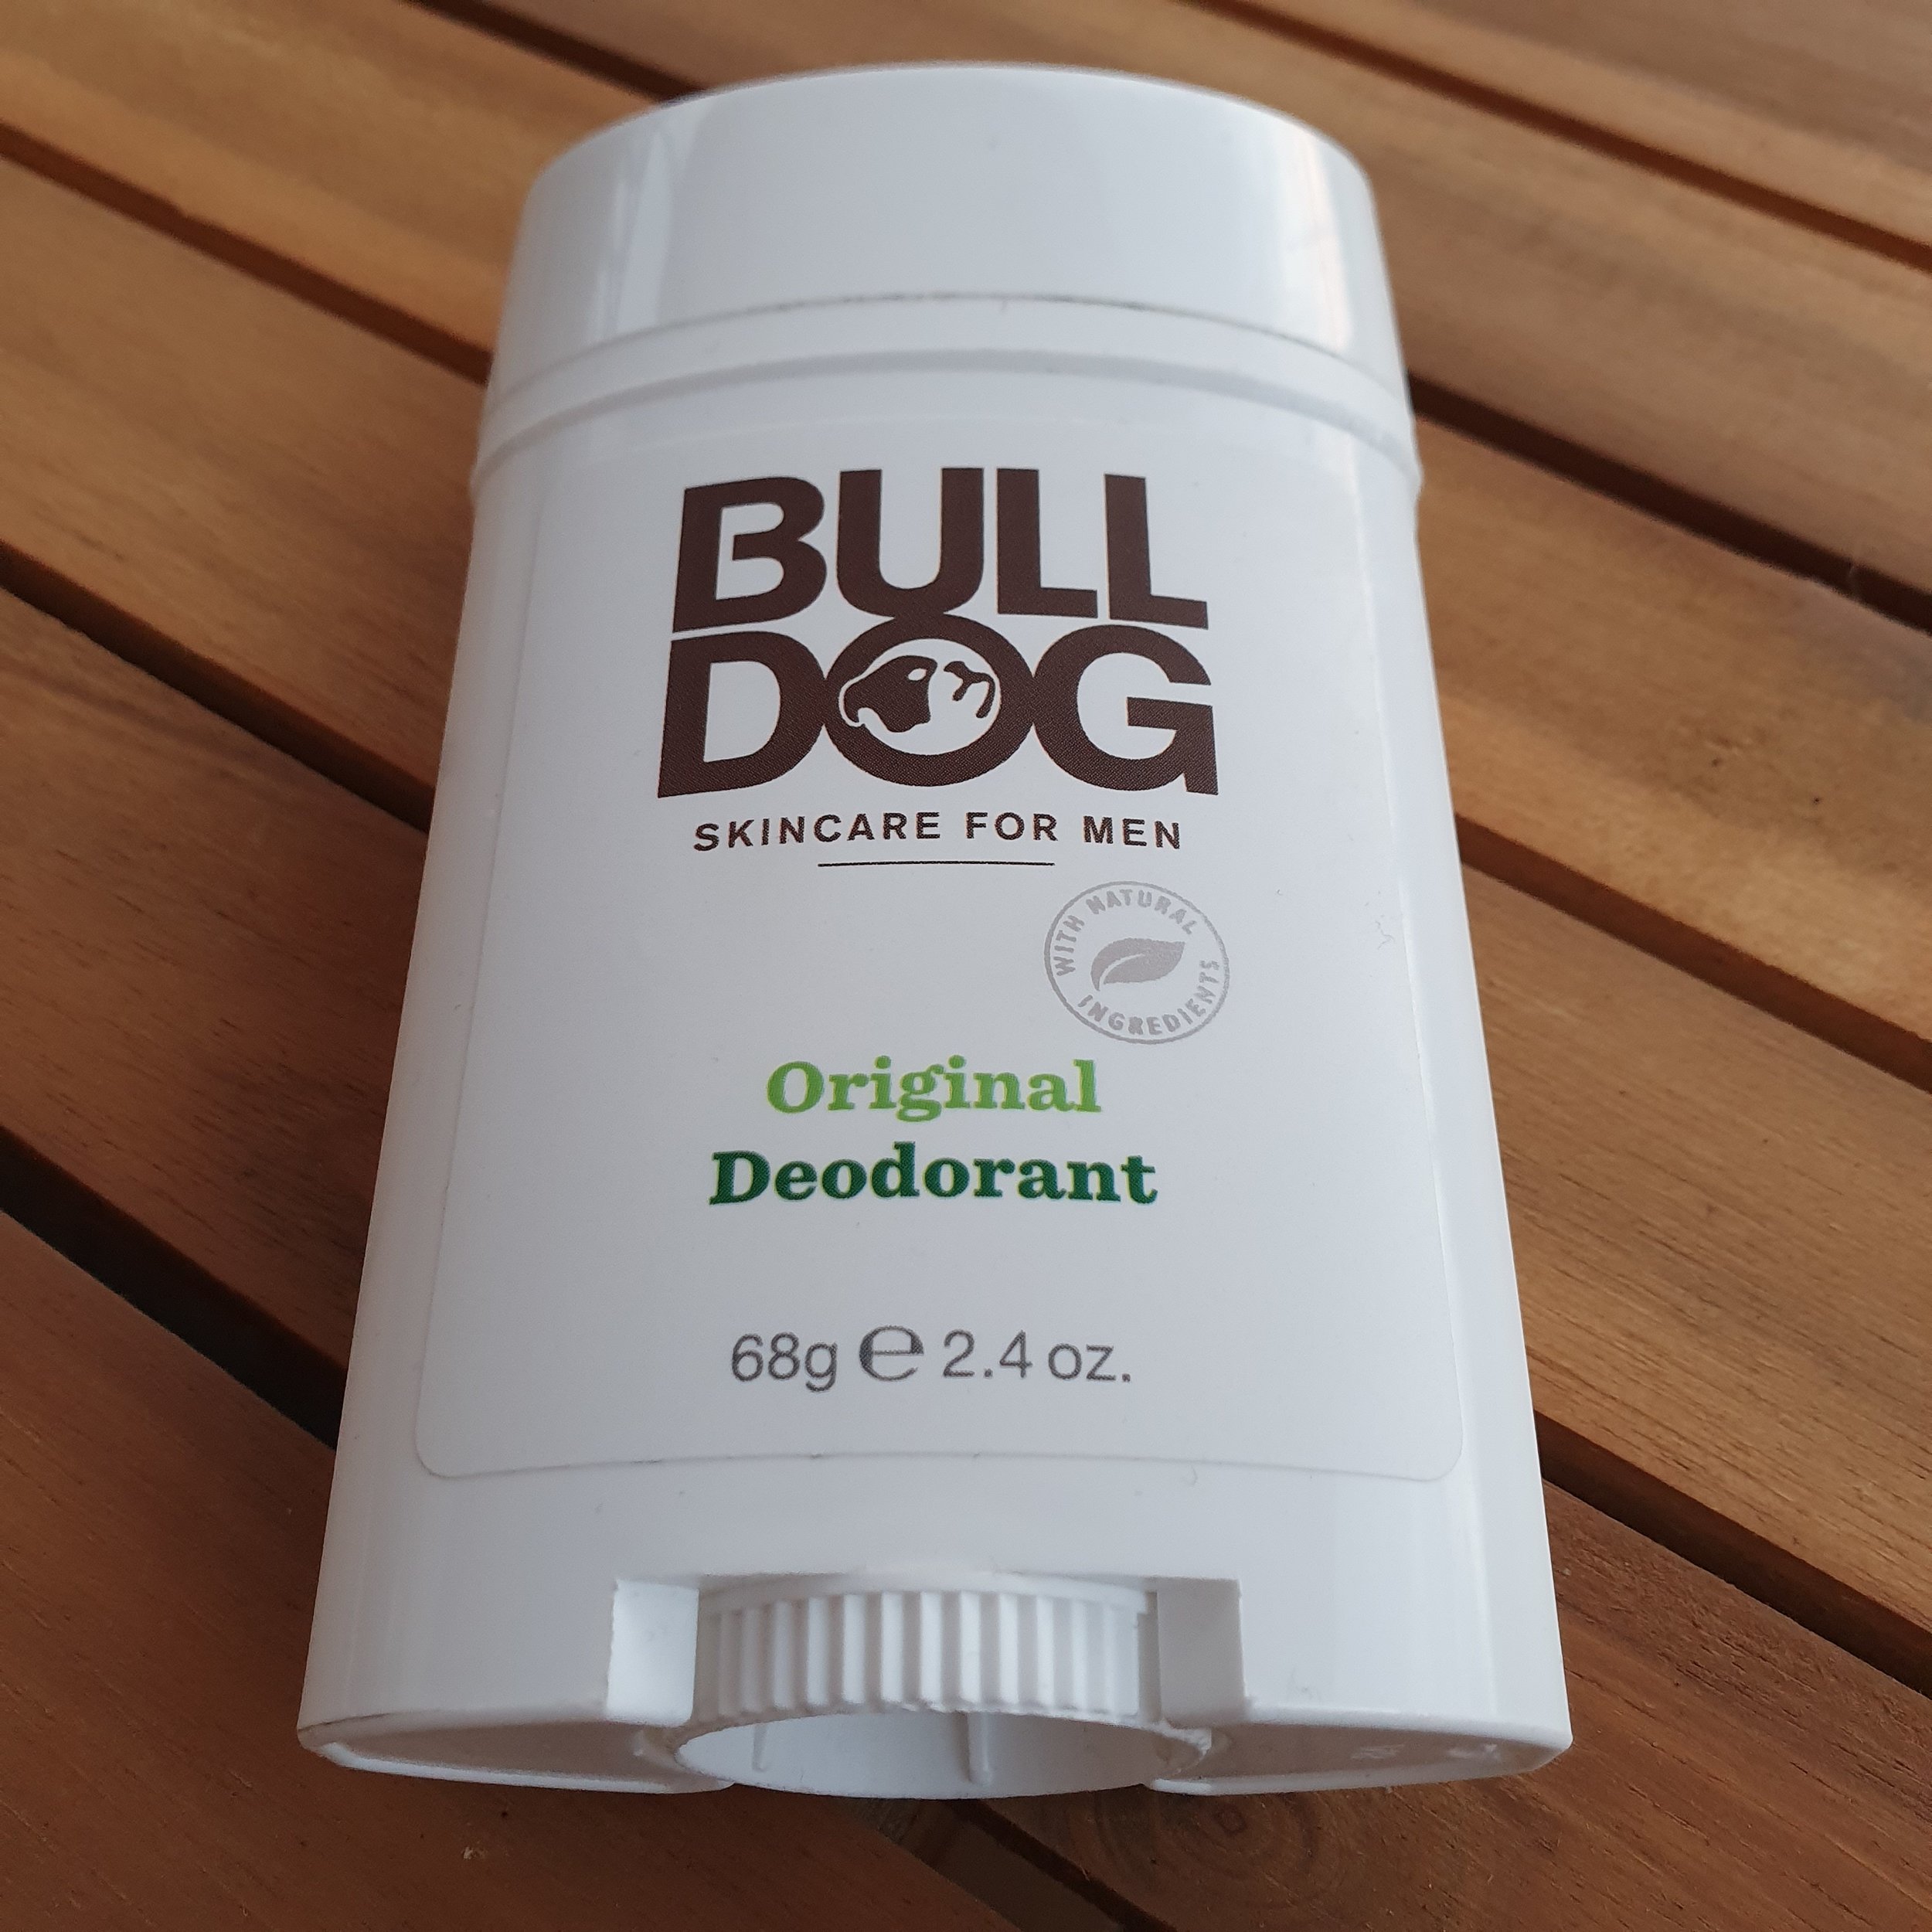 Bulldog Deodorant Review: I expected more be honest! dapper & groomed